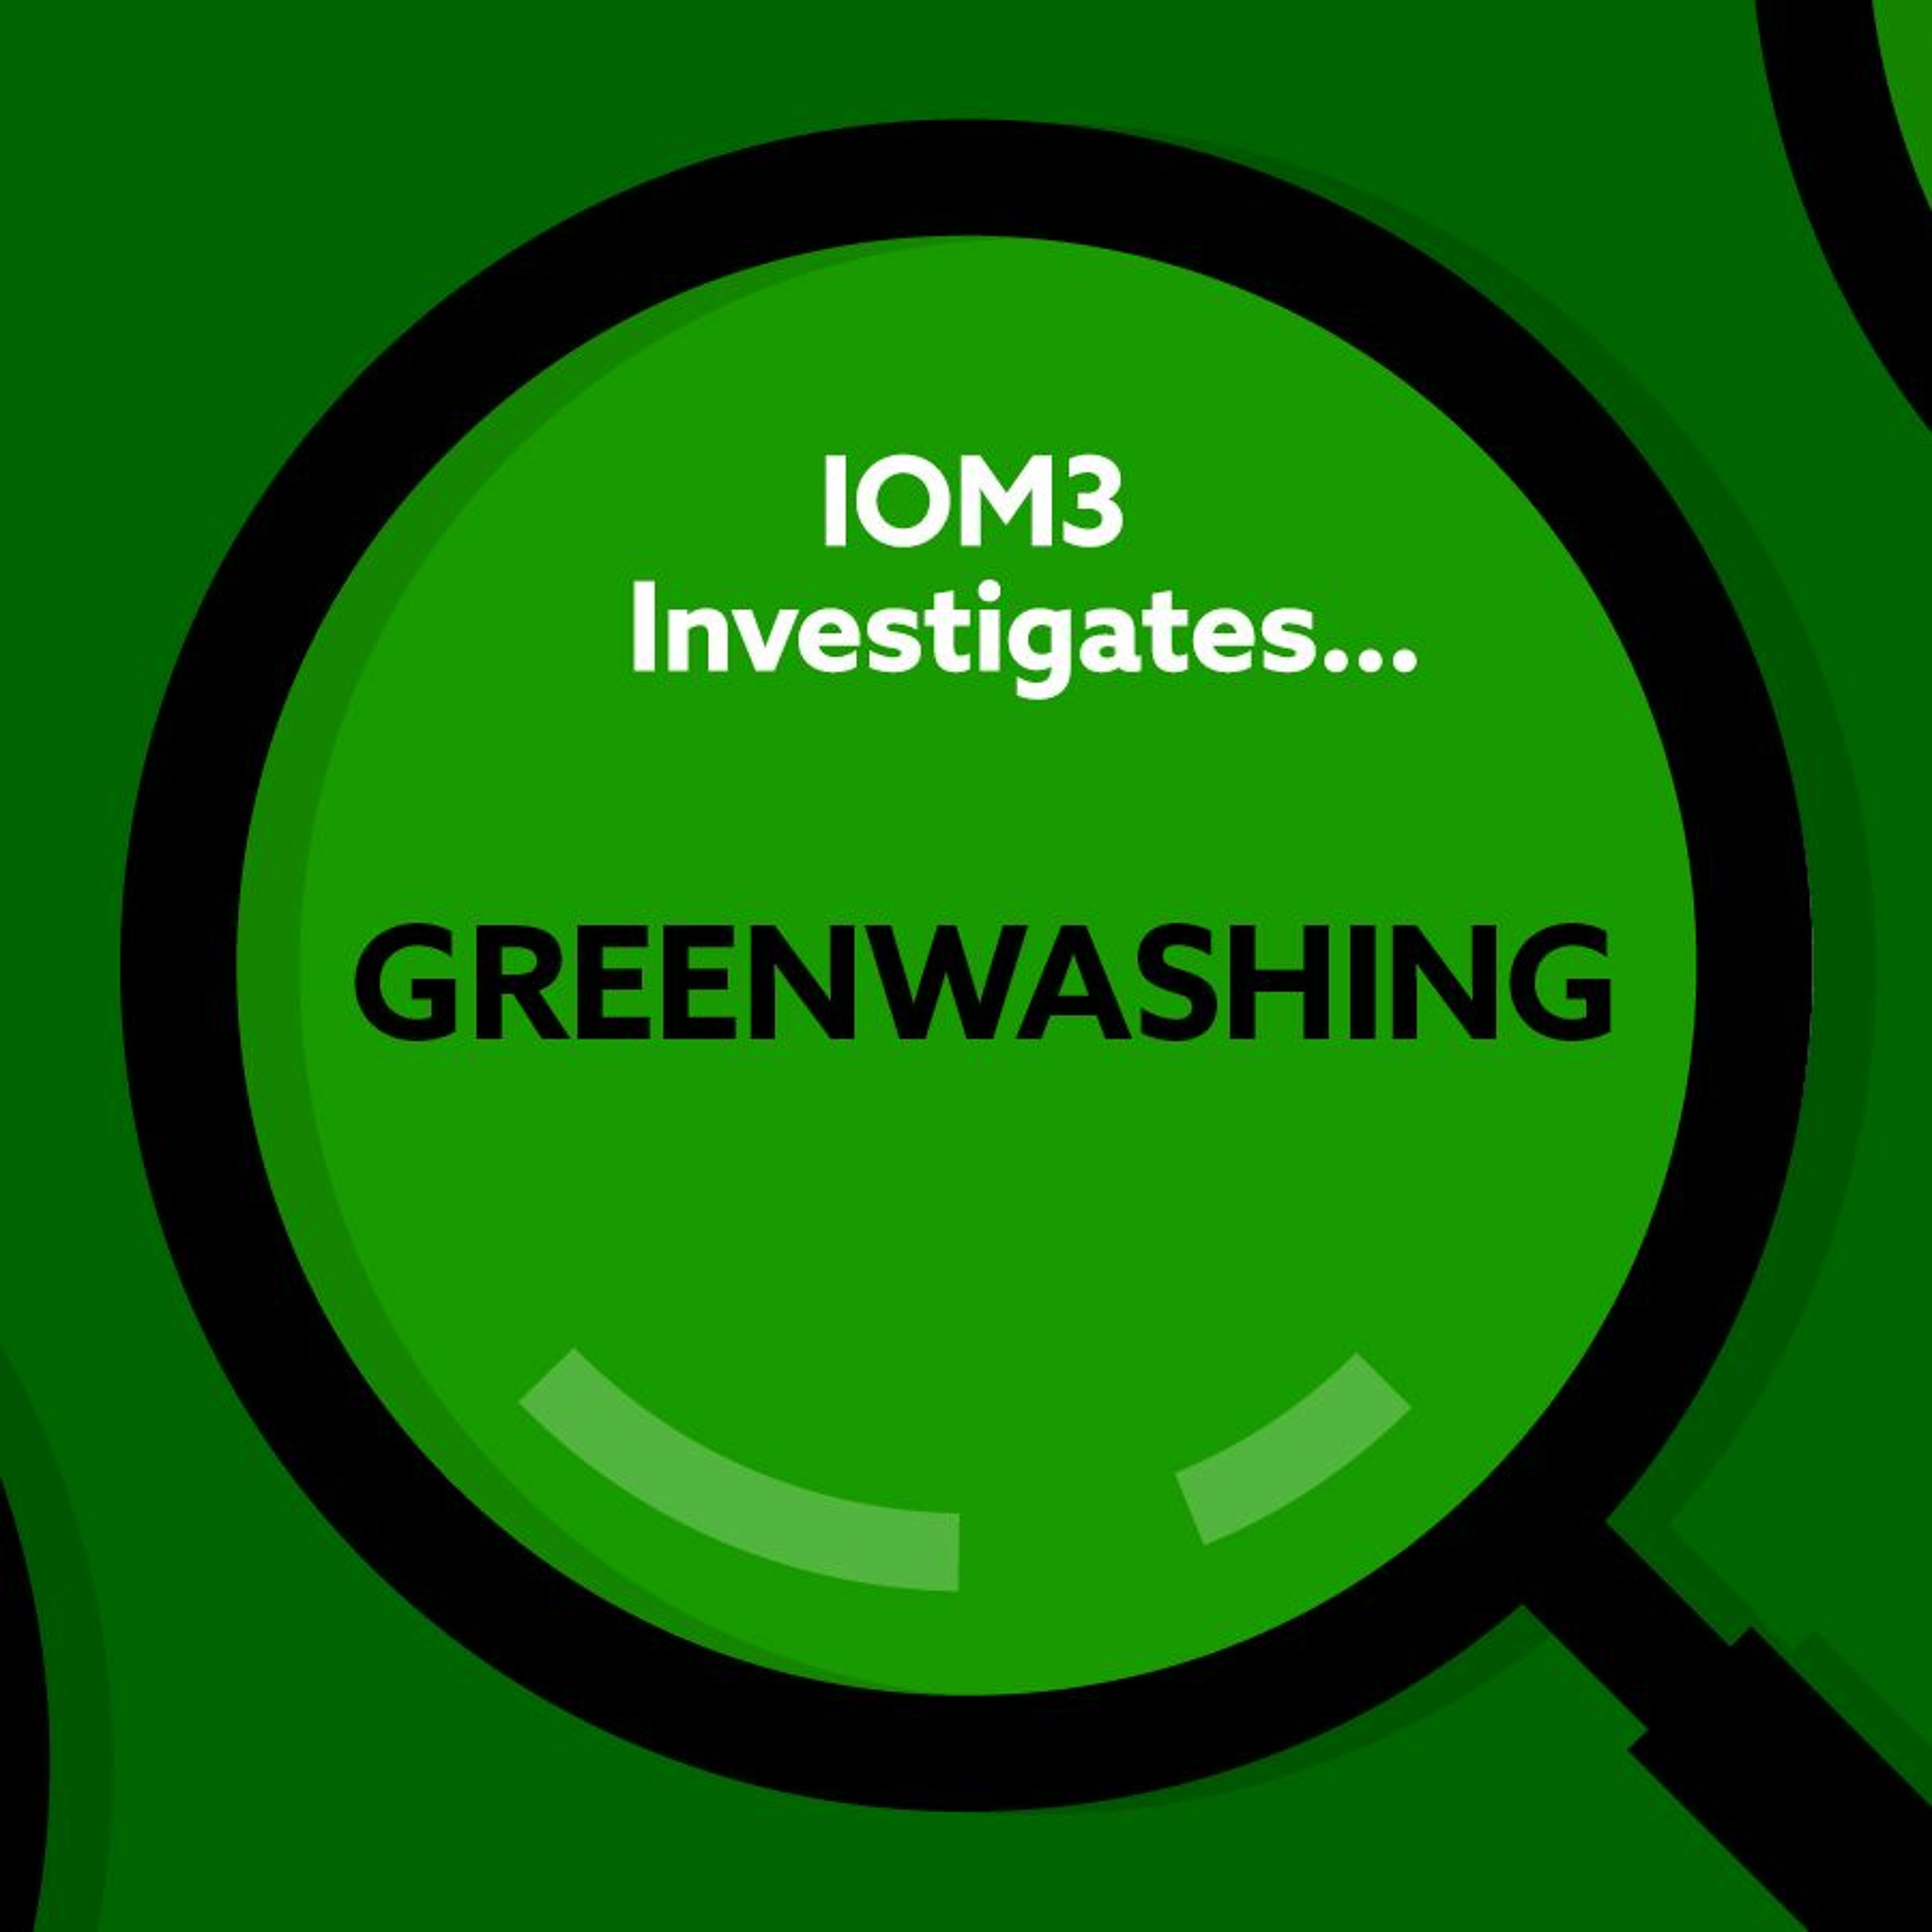 IOM3 Investigates... Greenwashing